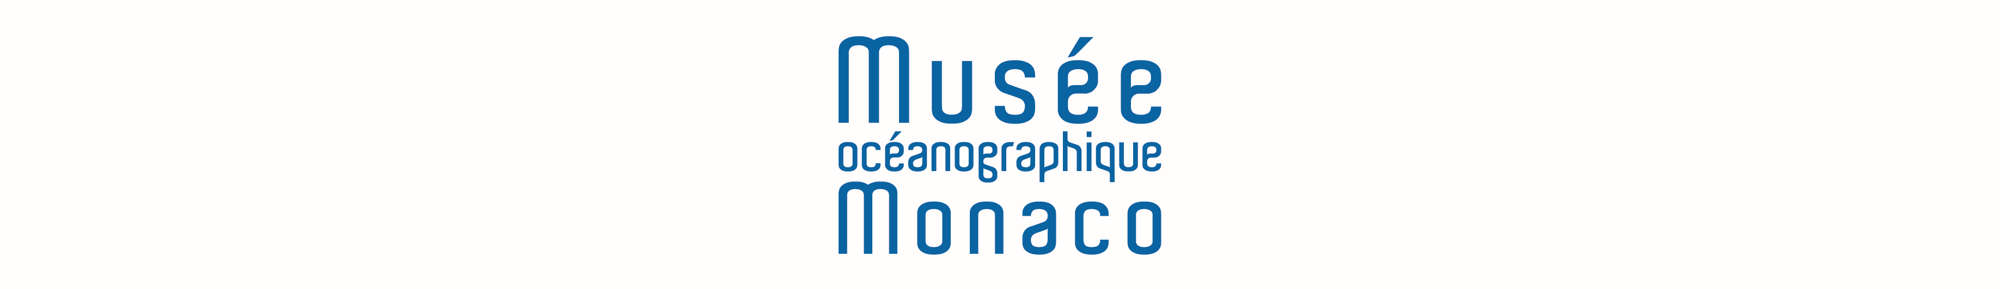 MUSÉE OCÉANOGRAPHIQUE DE MONACO logo